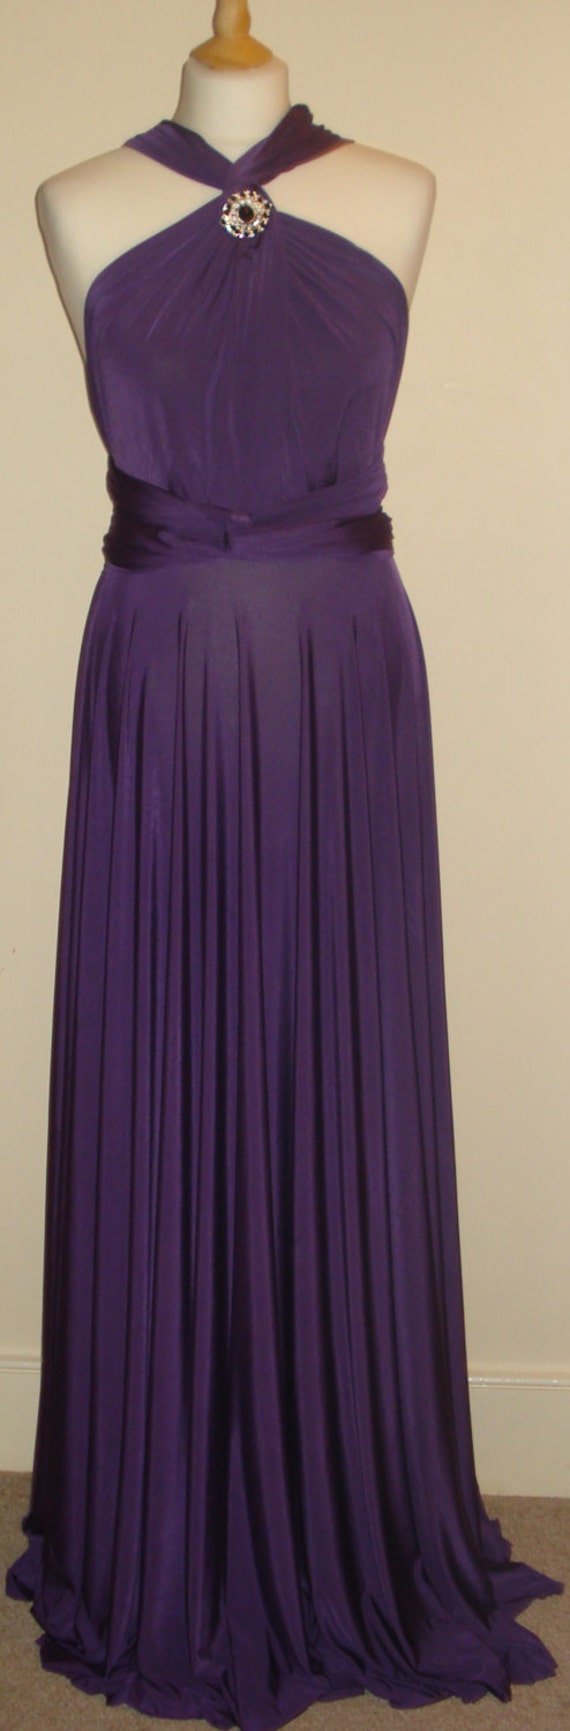 Aubergine Infinity Bridesmaid Dress Convertible Dress twist